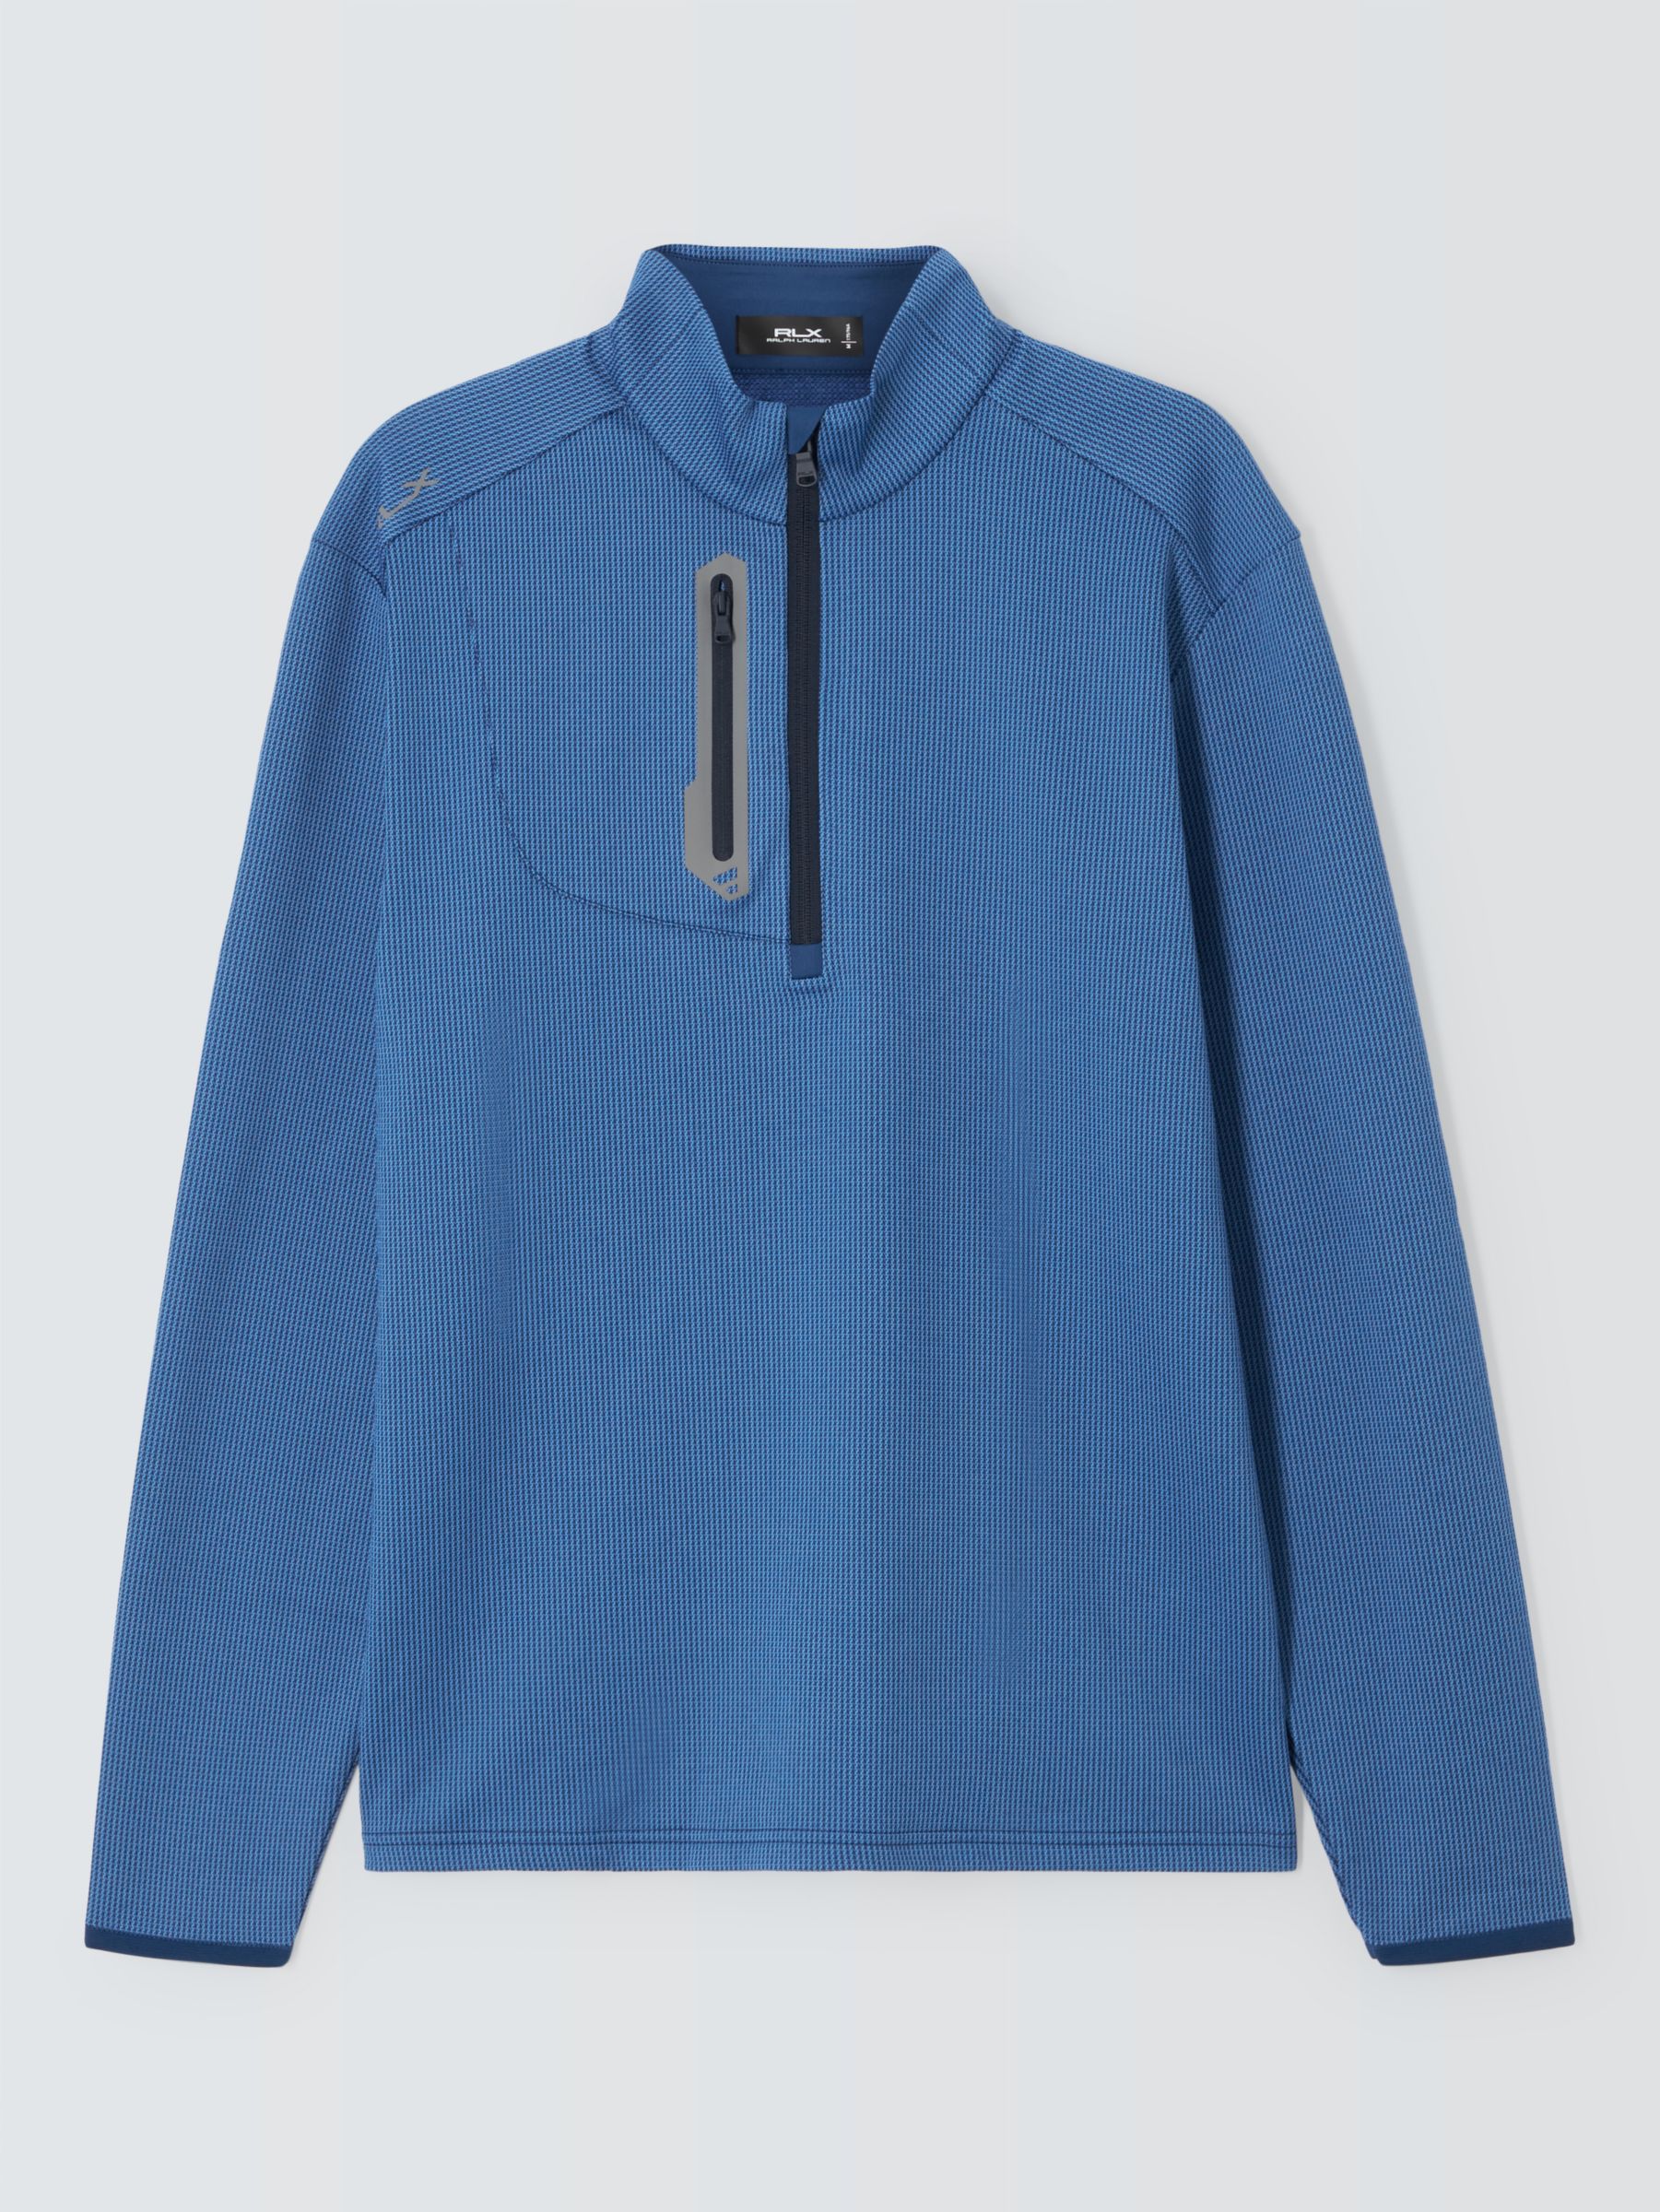 Buy Ralph Lauren Classic Fit Luxury Jersey Pullover Jersey Top, Blue Online at johnlewis.com